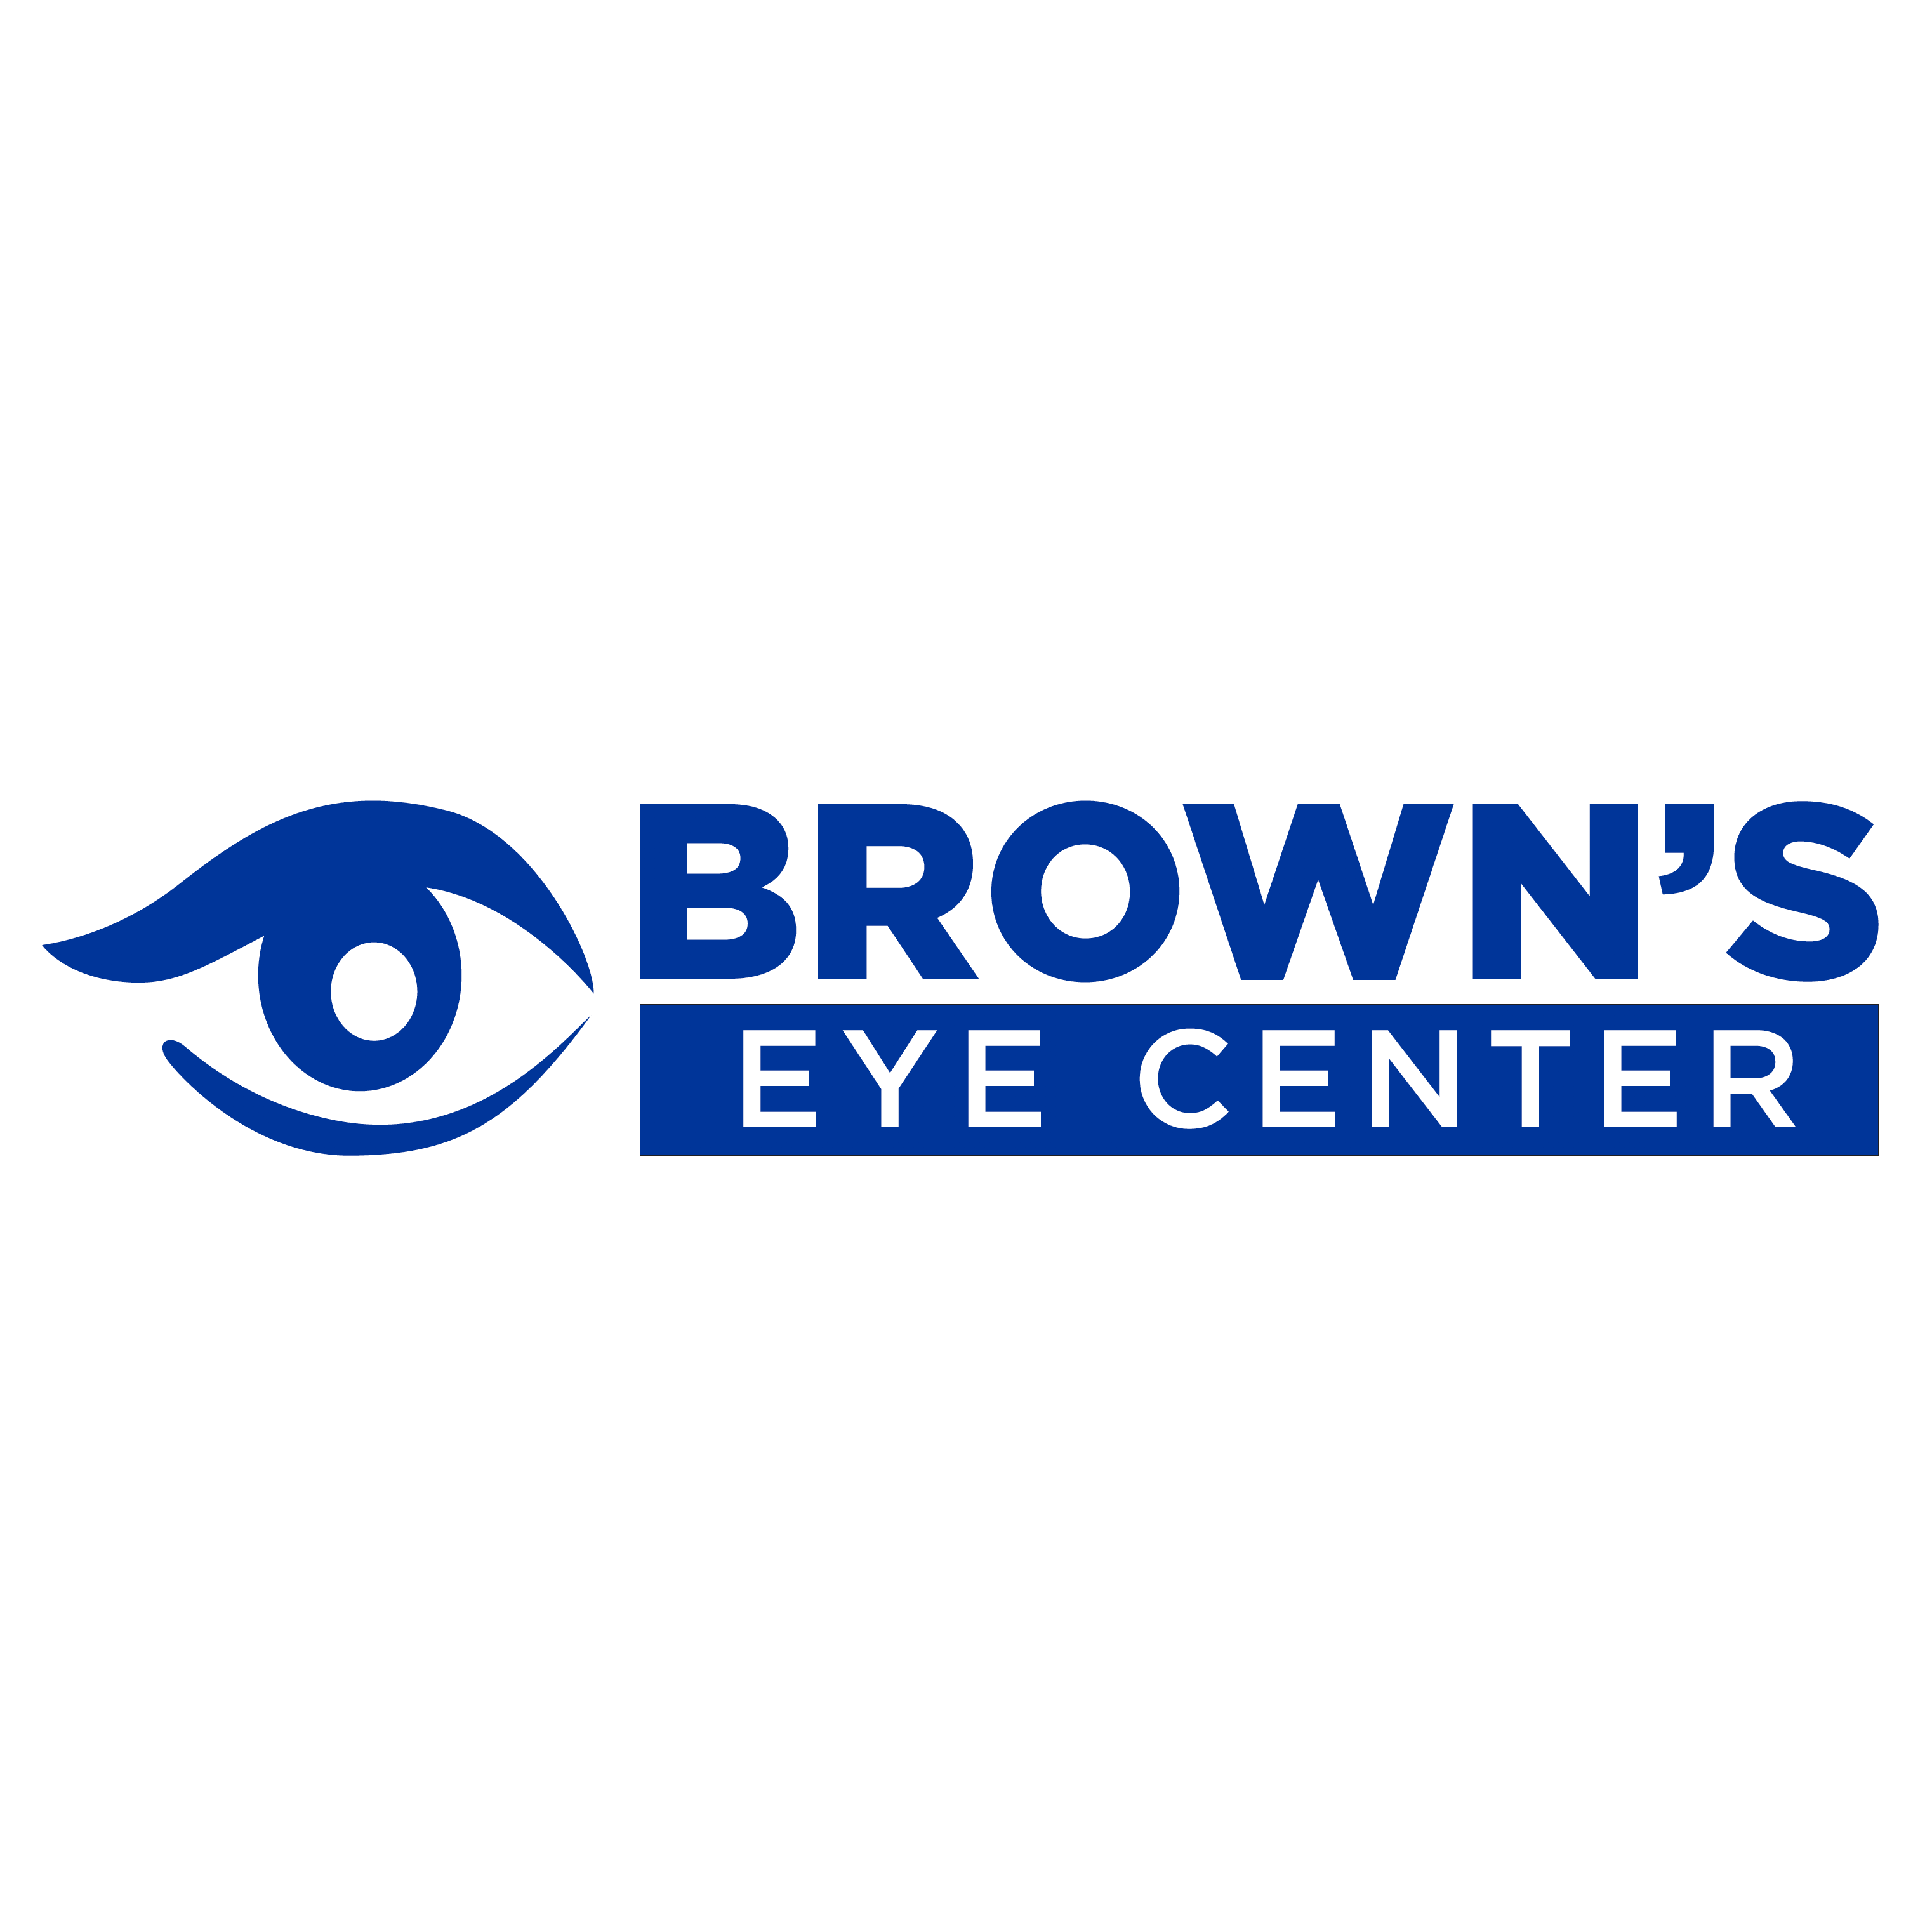 Brown's Eye Center Photo